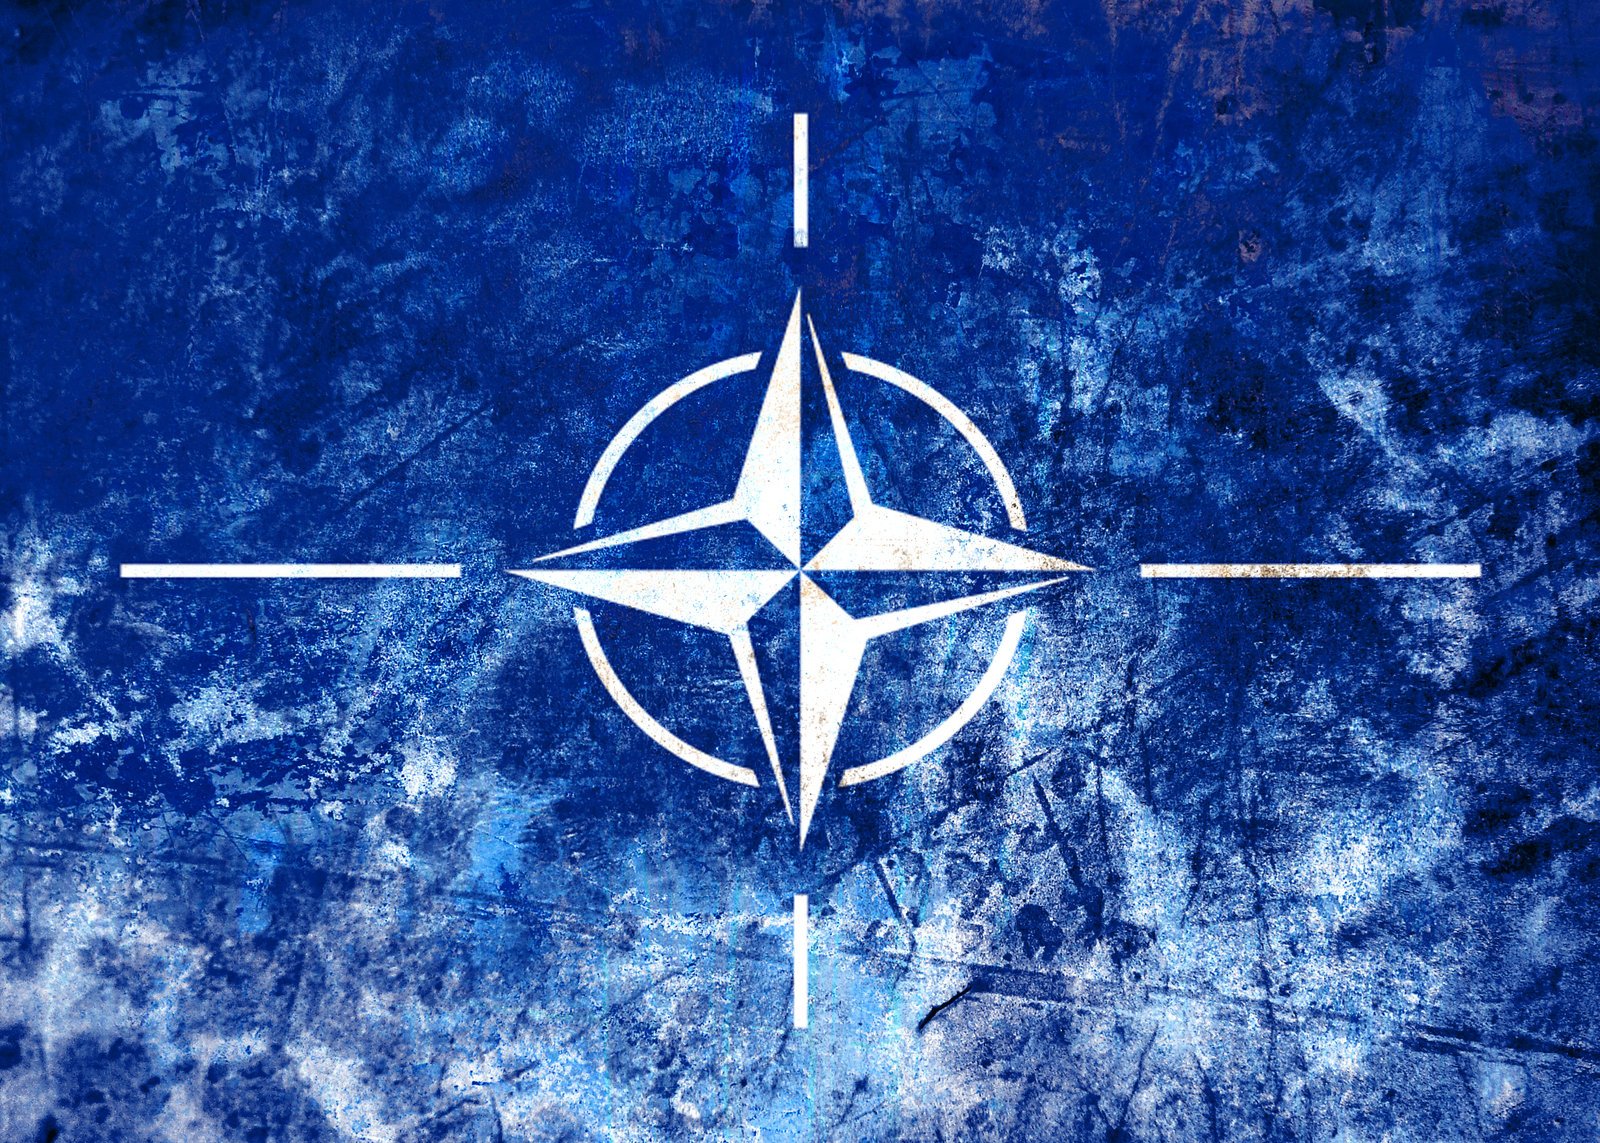 Нато дзен. Флаг НАТО 1949. Североатлантический Альянс НАТО. Флаг Североатлантического Альянса. NATO (North Atlantic Treaty Organization) - Североатлантический военный Альянс (НАТО)..